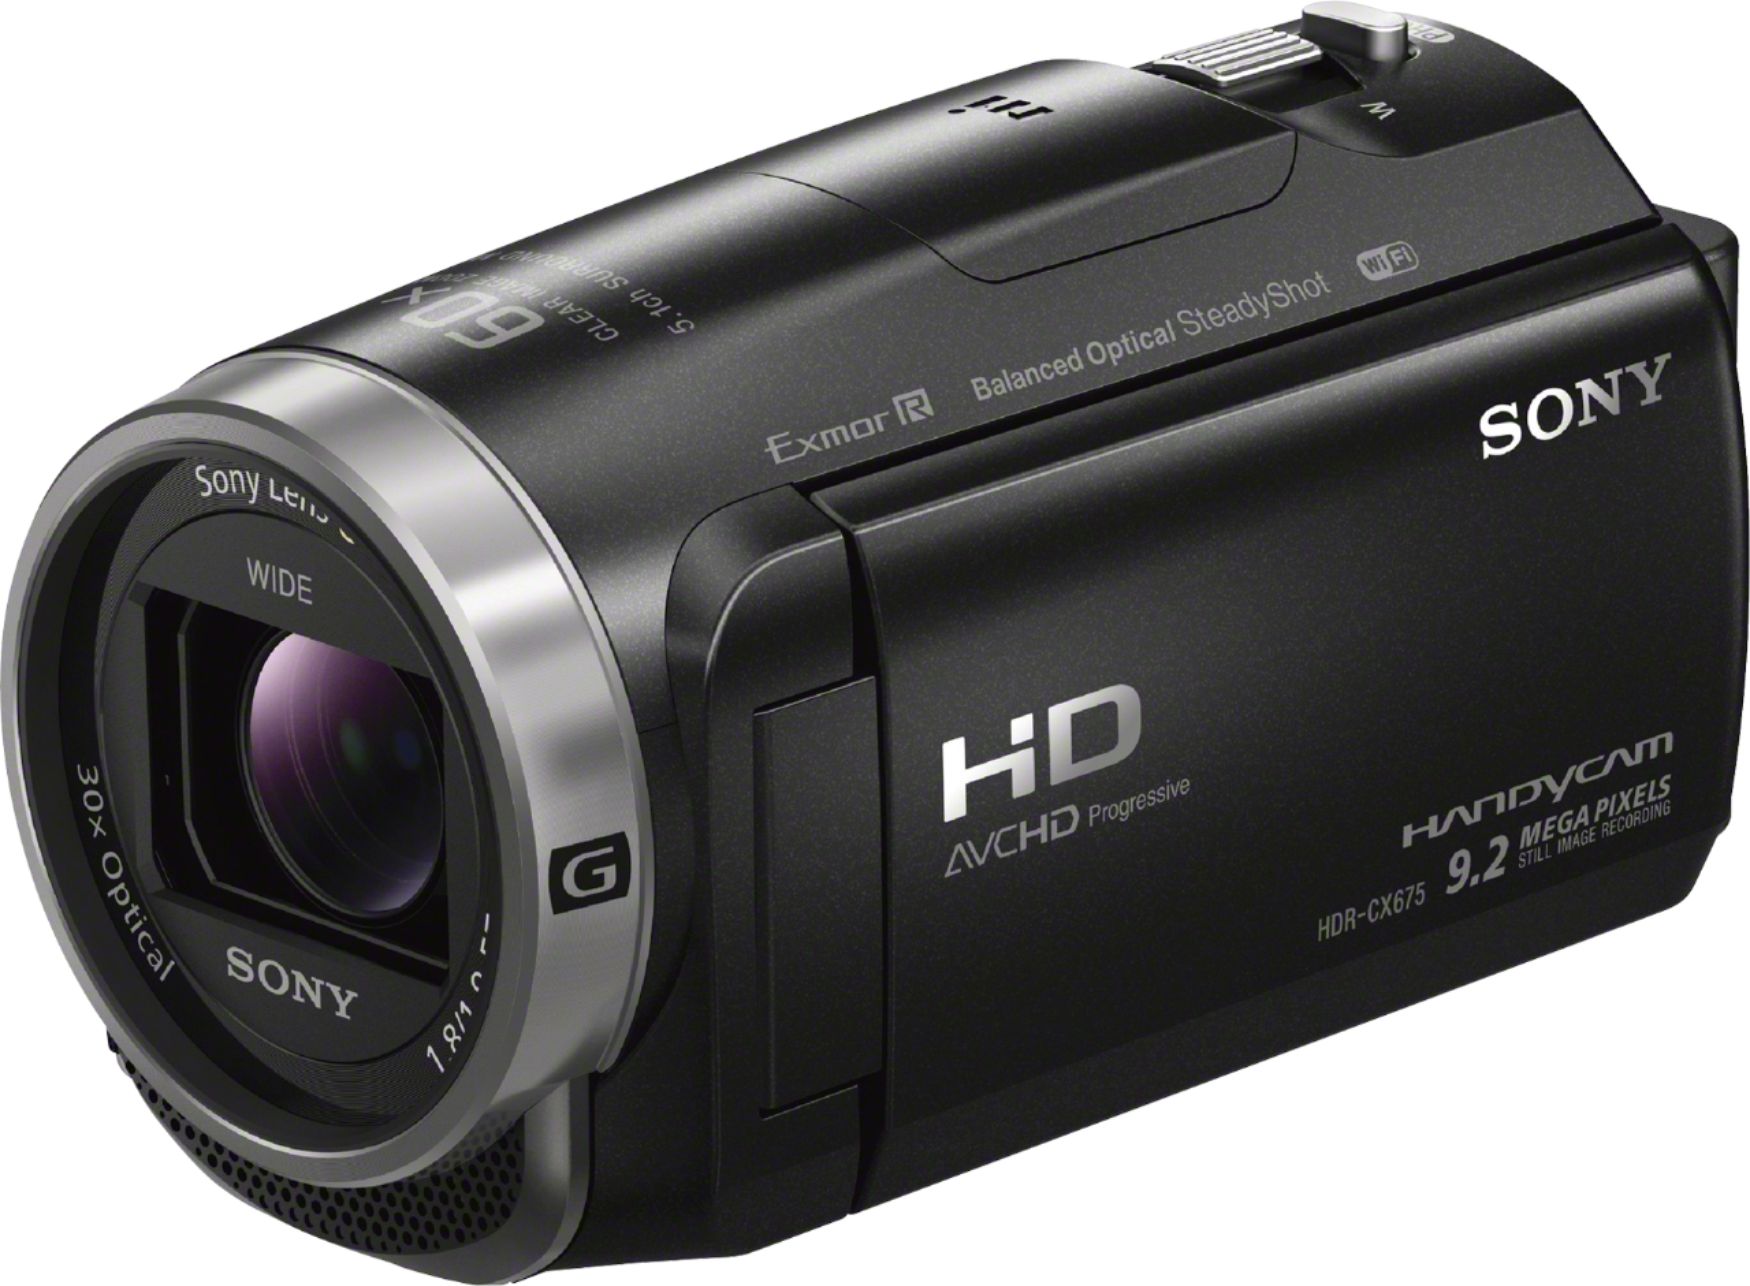 Ajuste compañera de clases Odiseo Sony Handycam CX675 32GB Flash Memory Camcorder Black HDRCX675/B - Best Buy